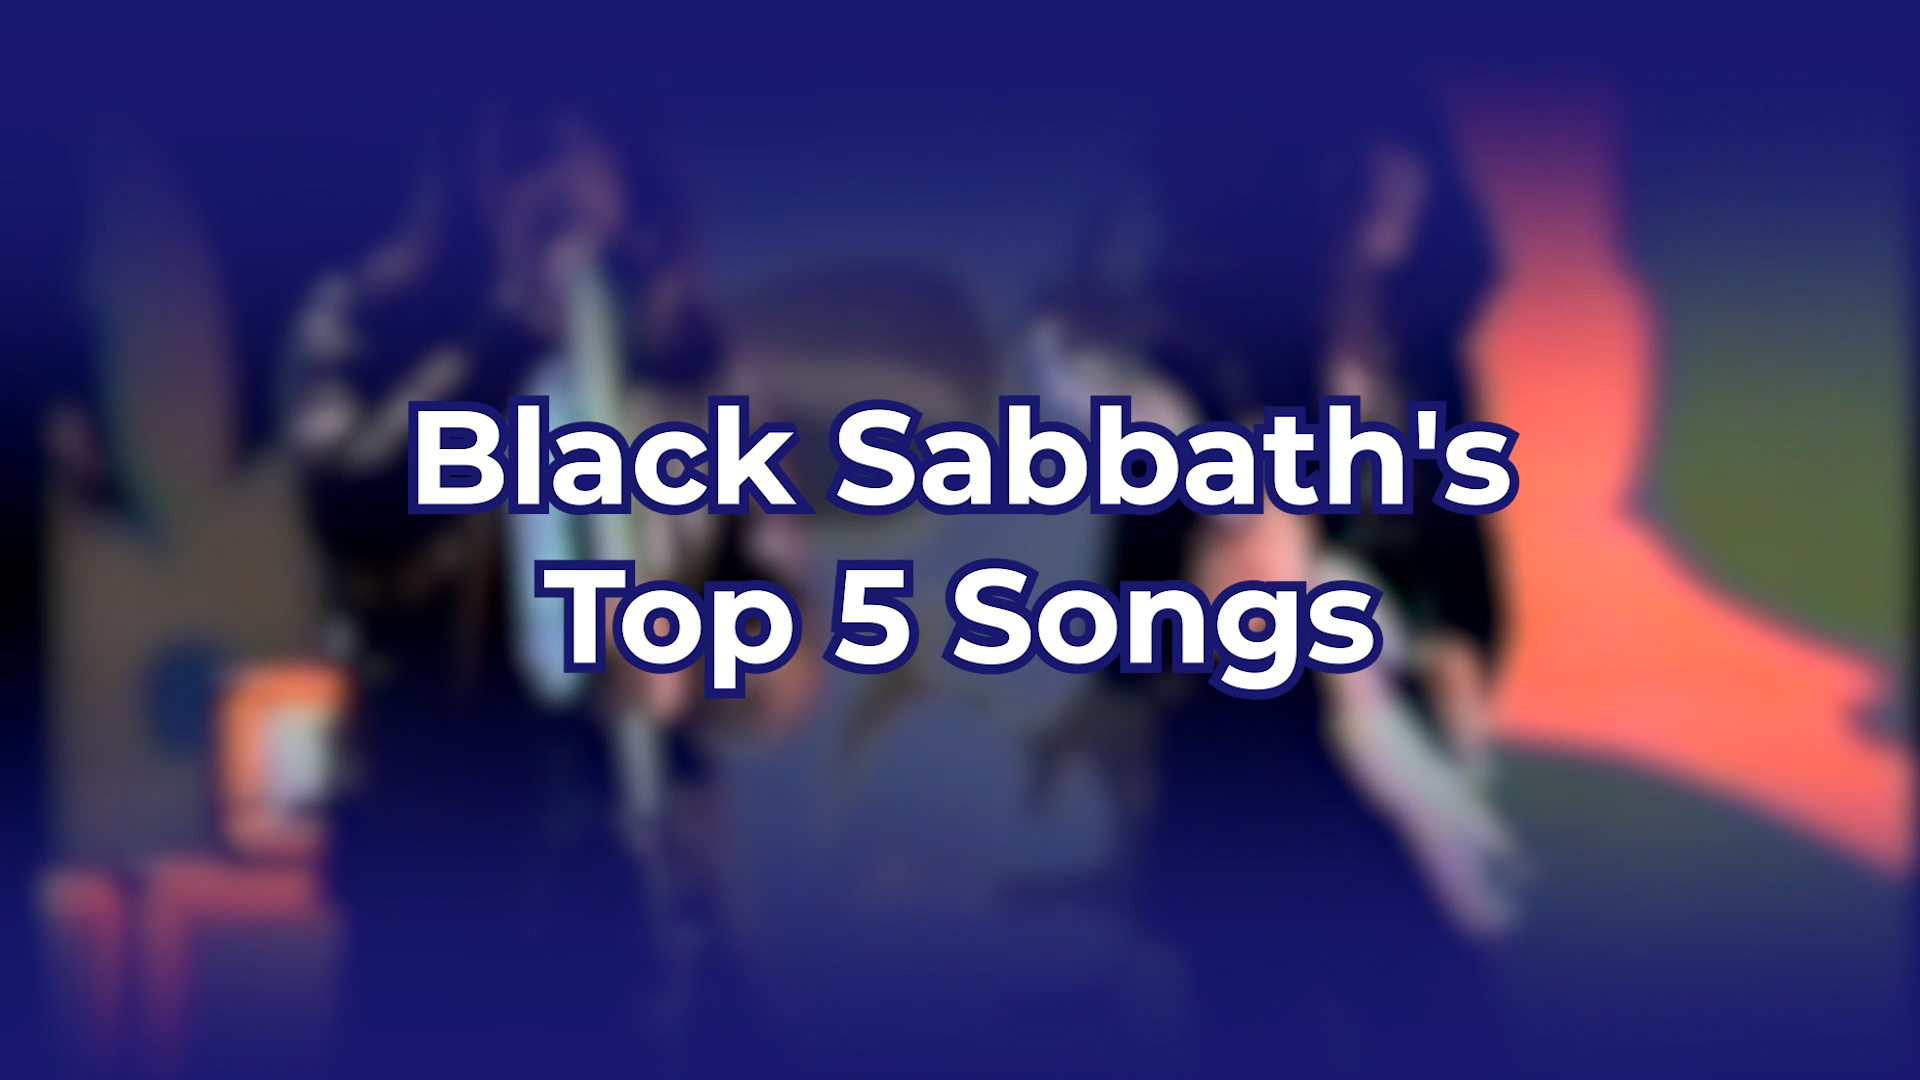 Black Sabbath’s Top 5 Songs